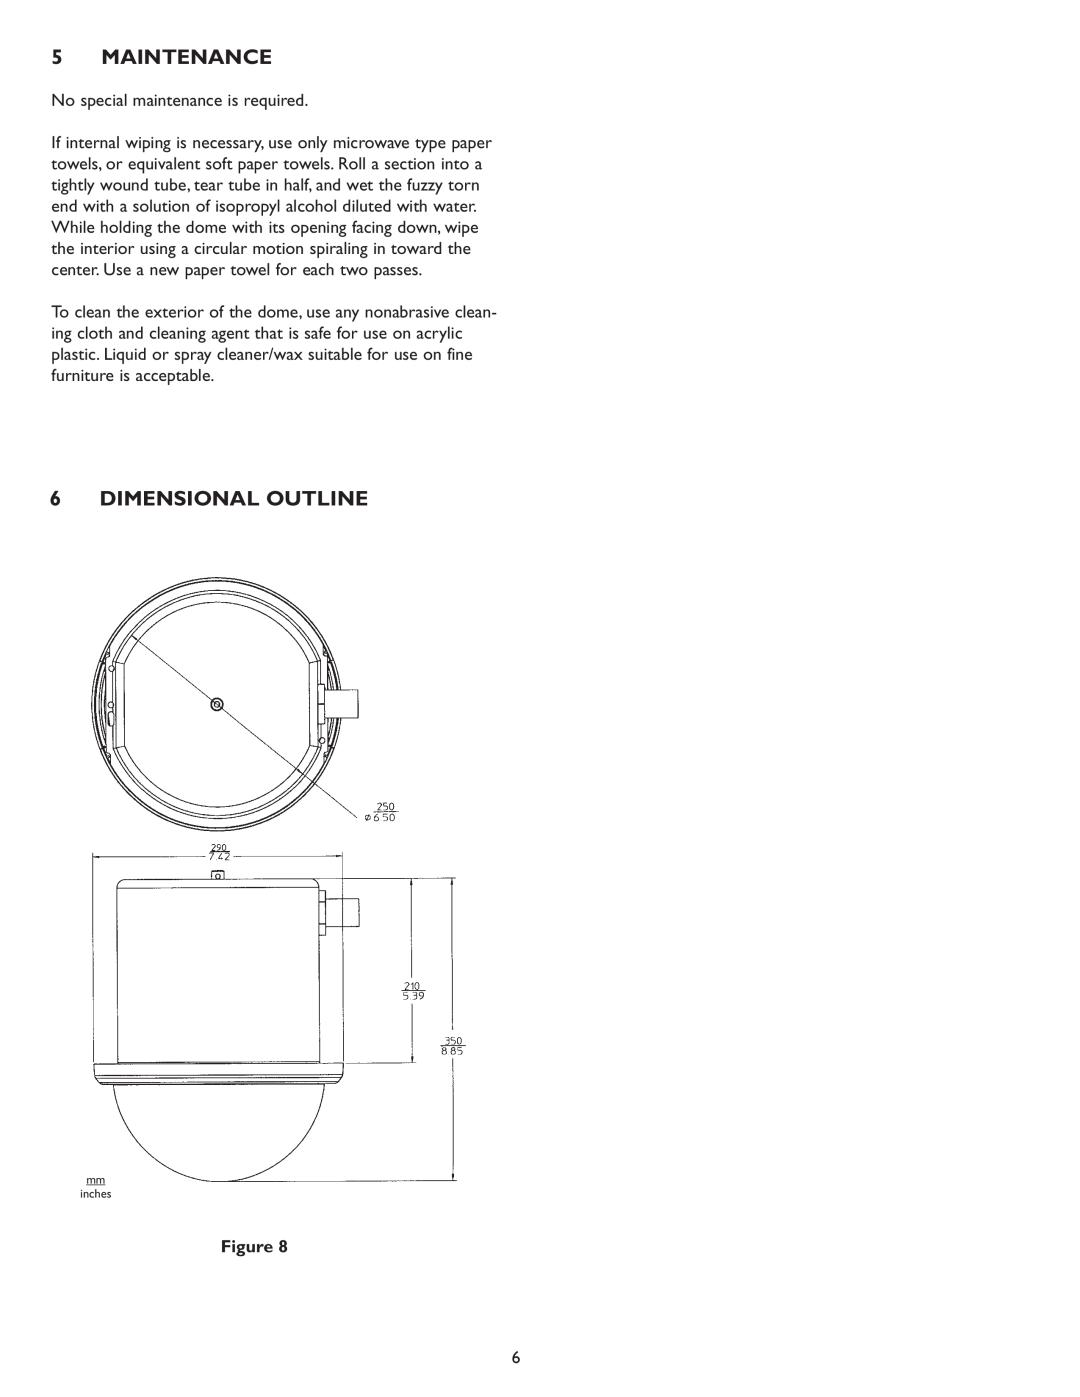 Sanyo VSE-6300 instruction manual Maintenance, Dimensional Outline 